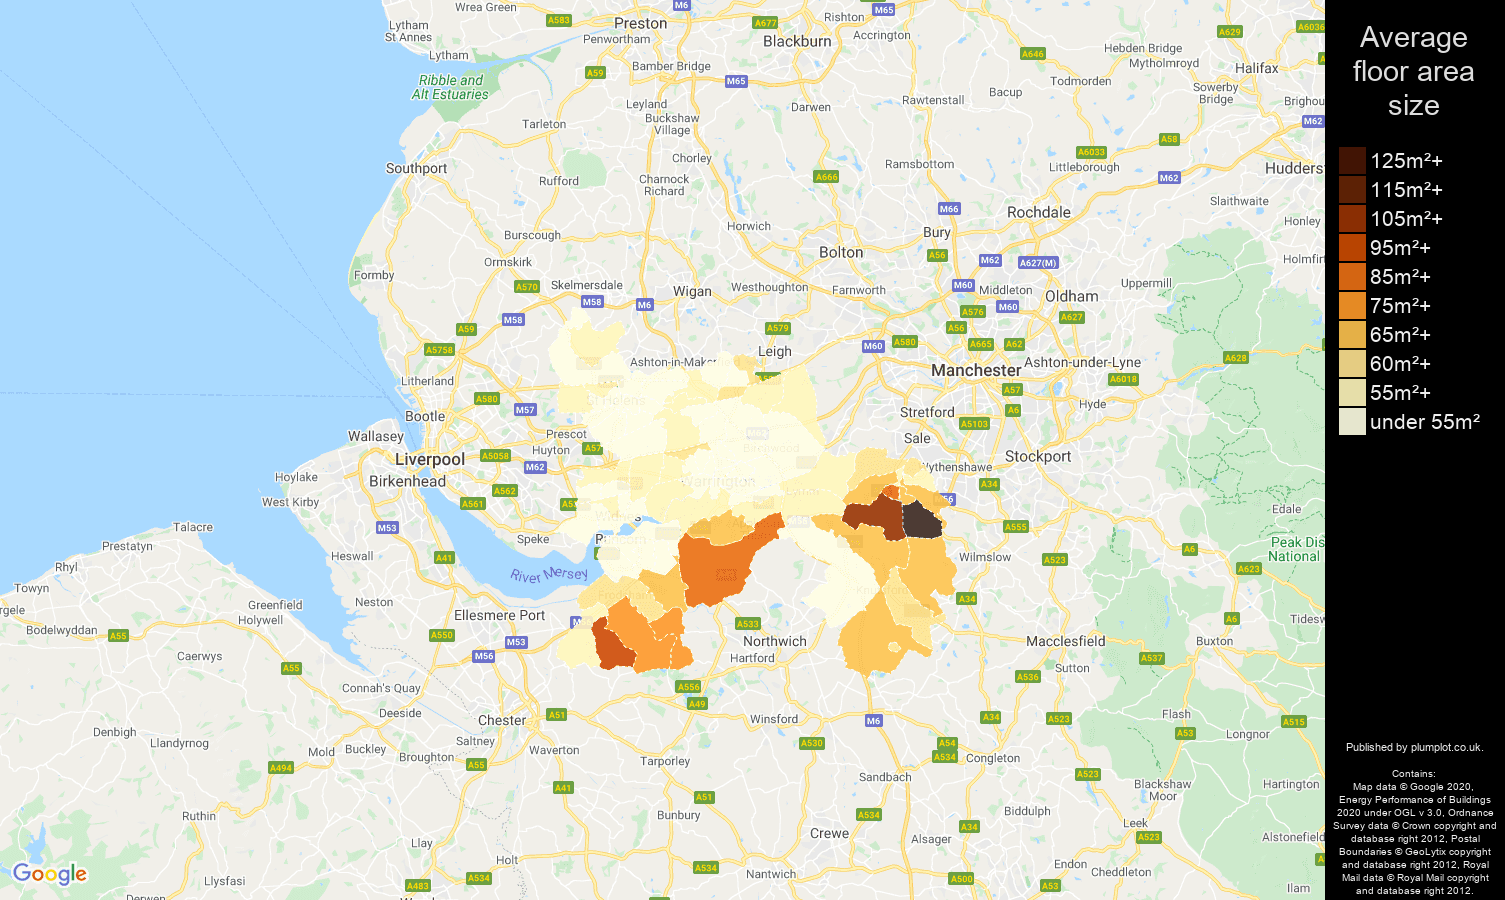 Warrington map of average floor area size of flats